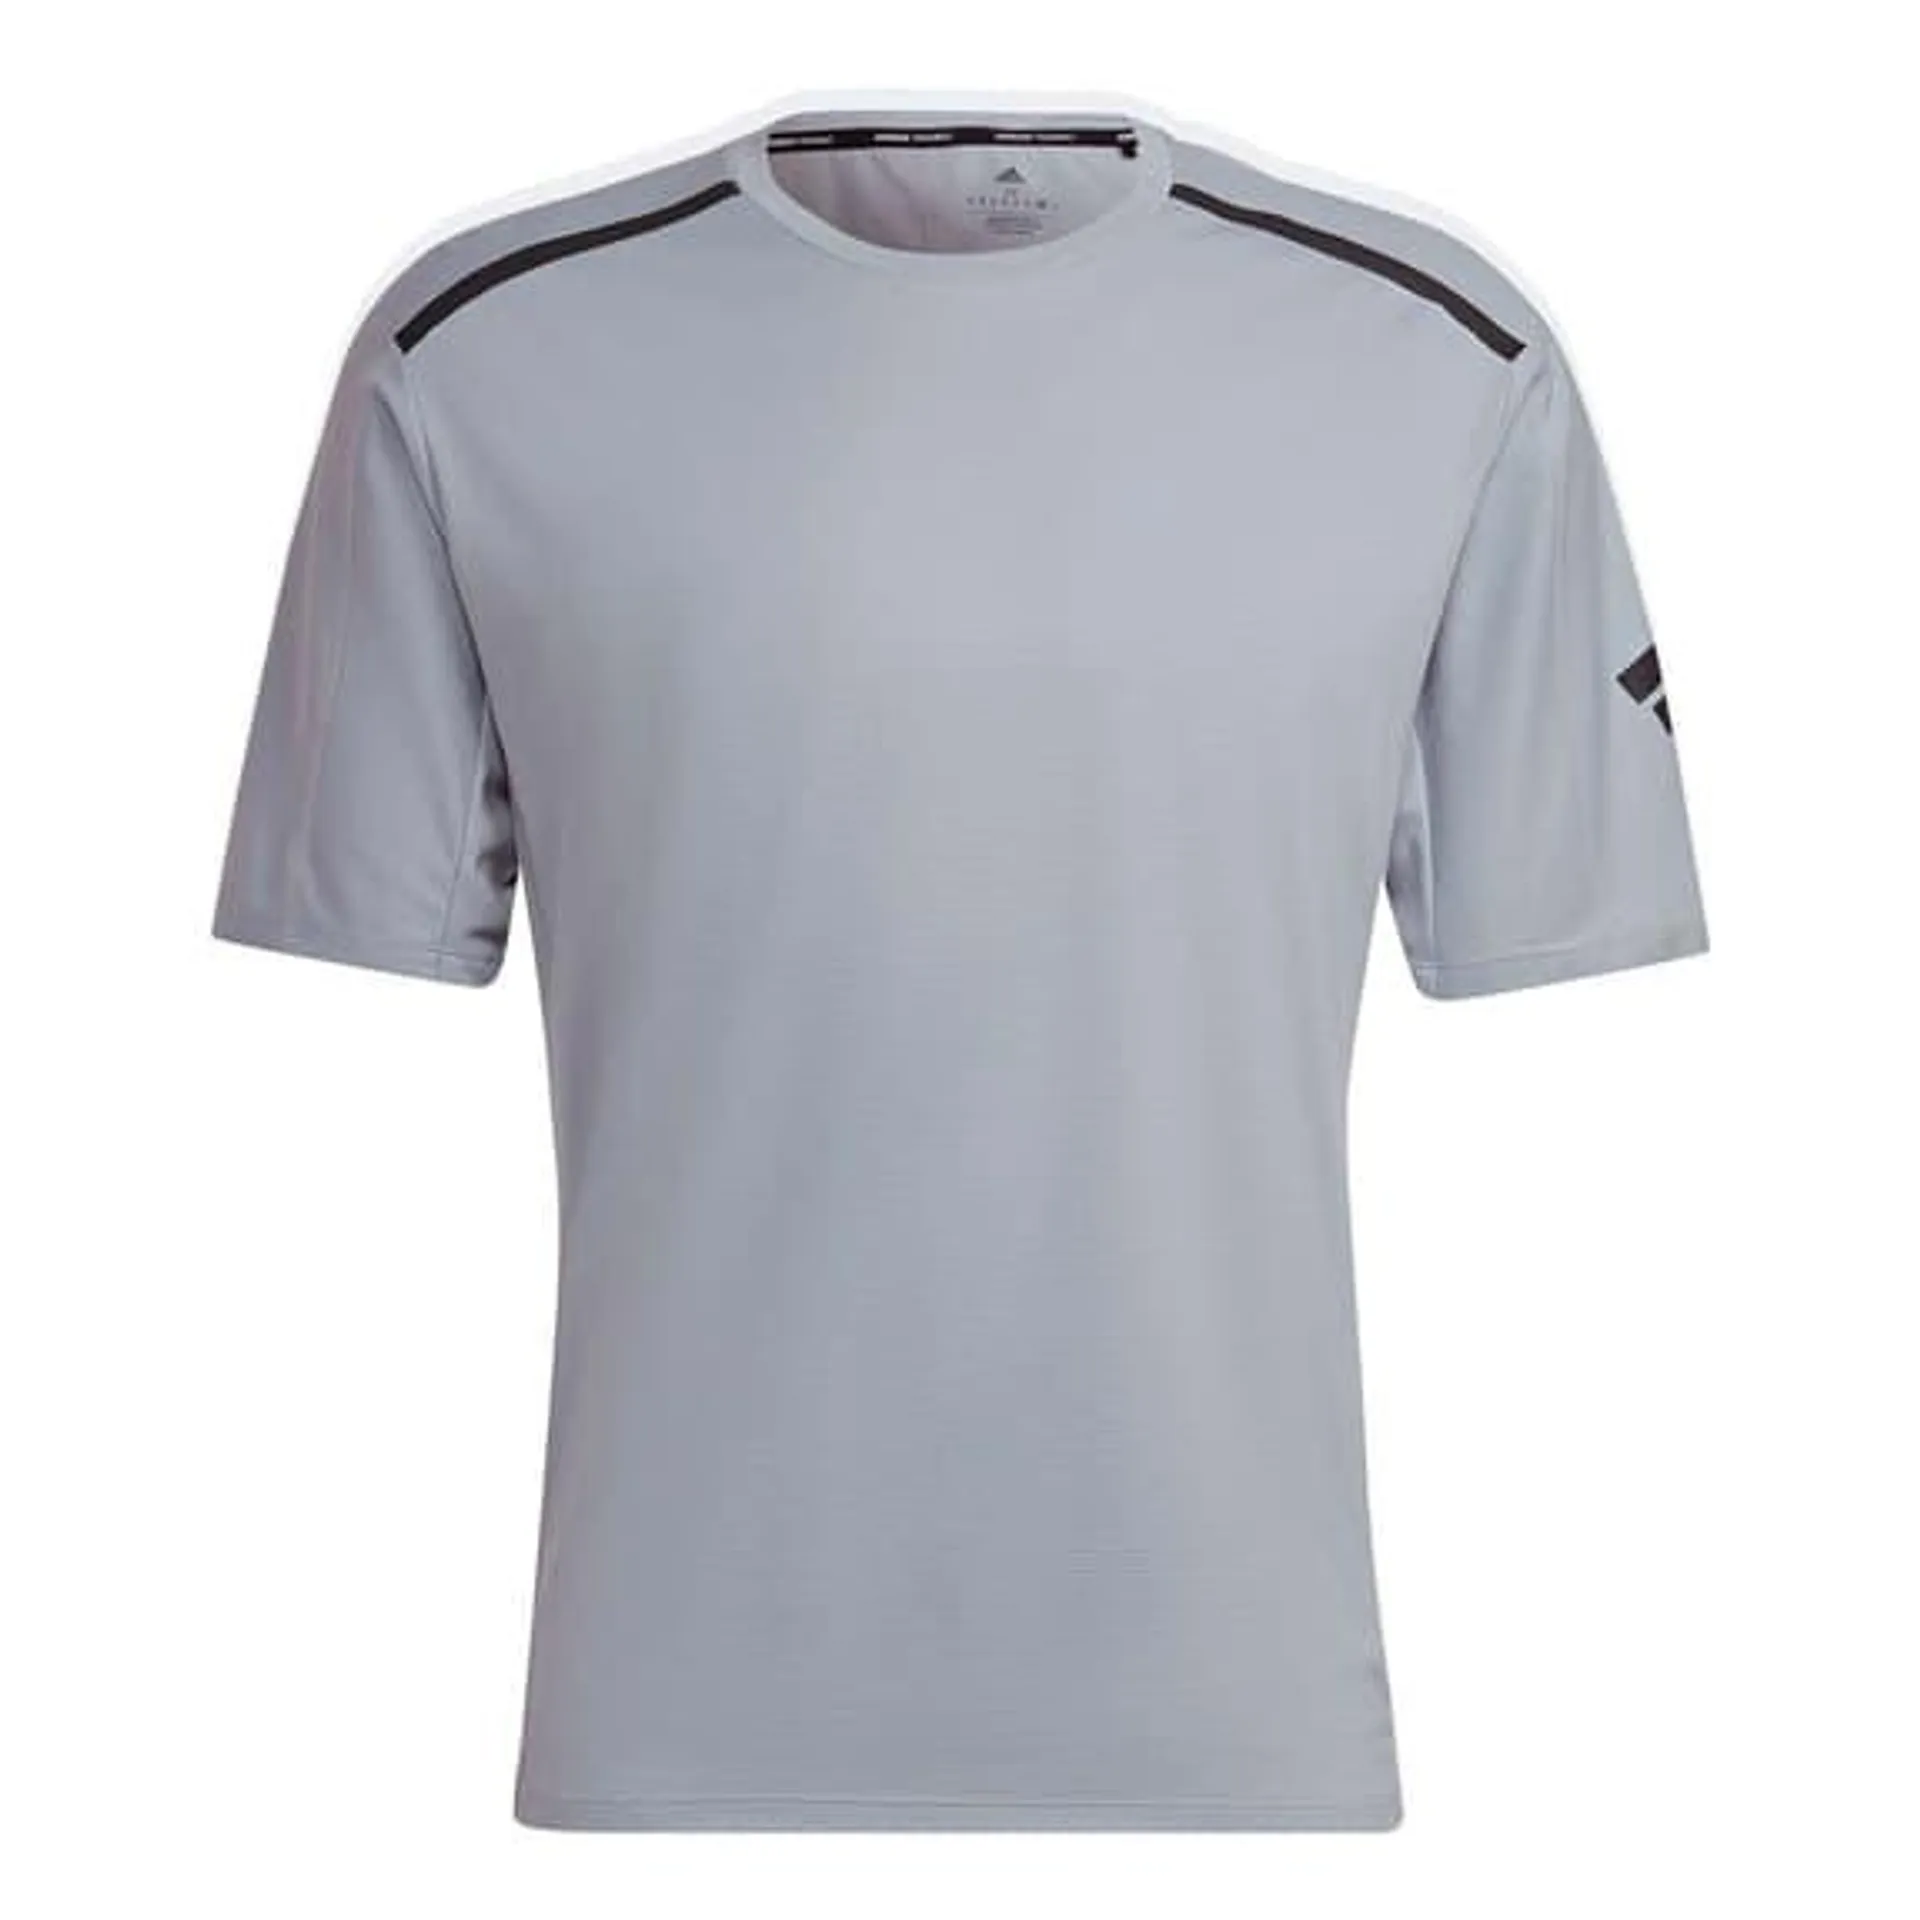 T-shirt adidas Workout PU-Coated manche courte gris noir